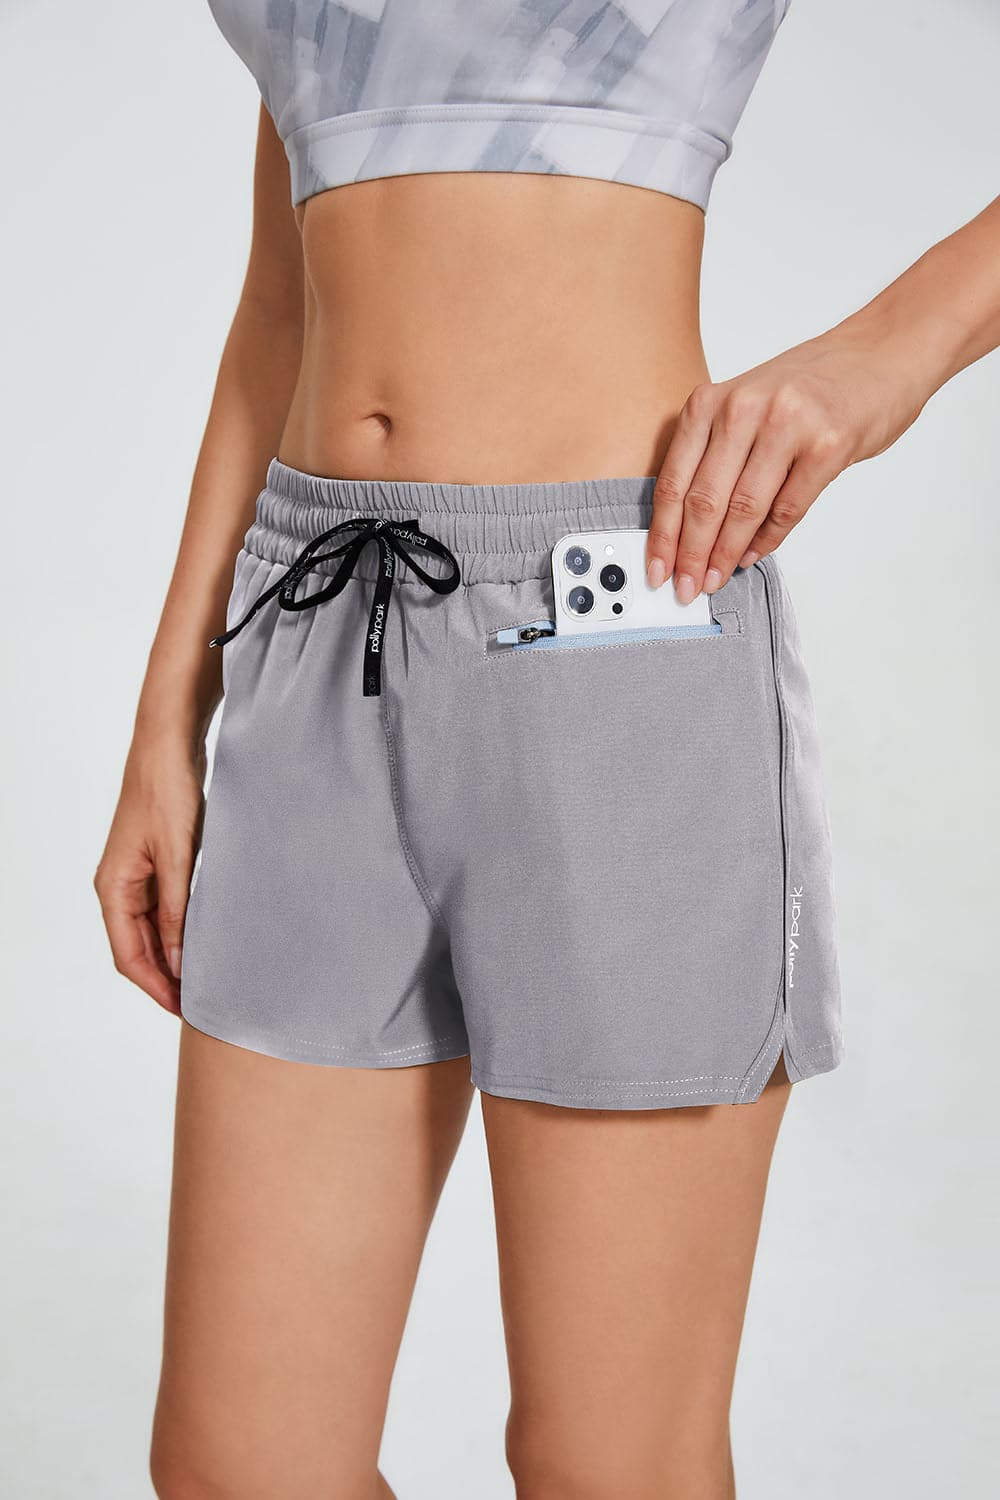 Pollypark new drawstring shorts with zip pocket